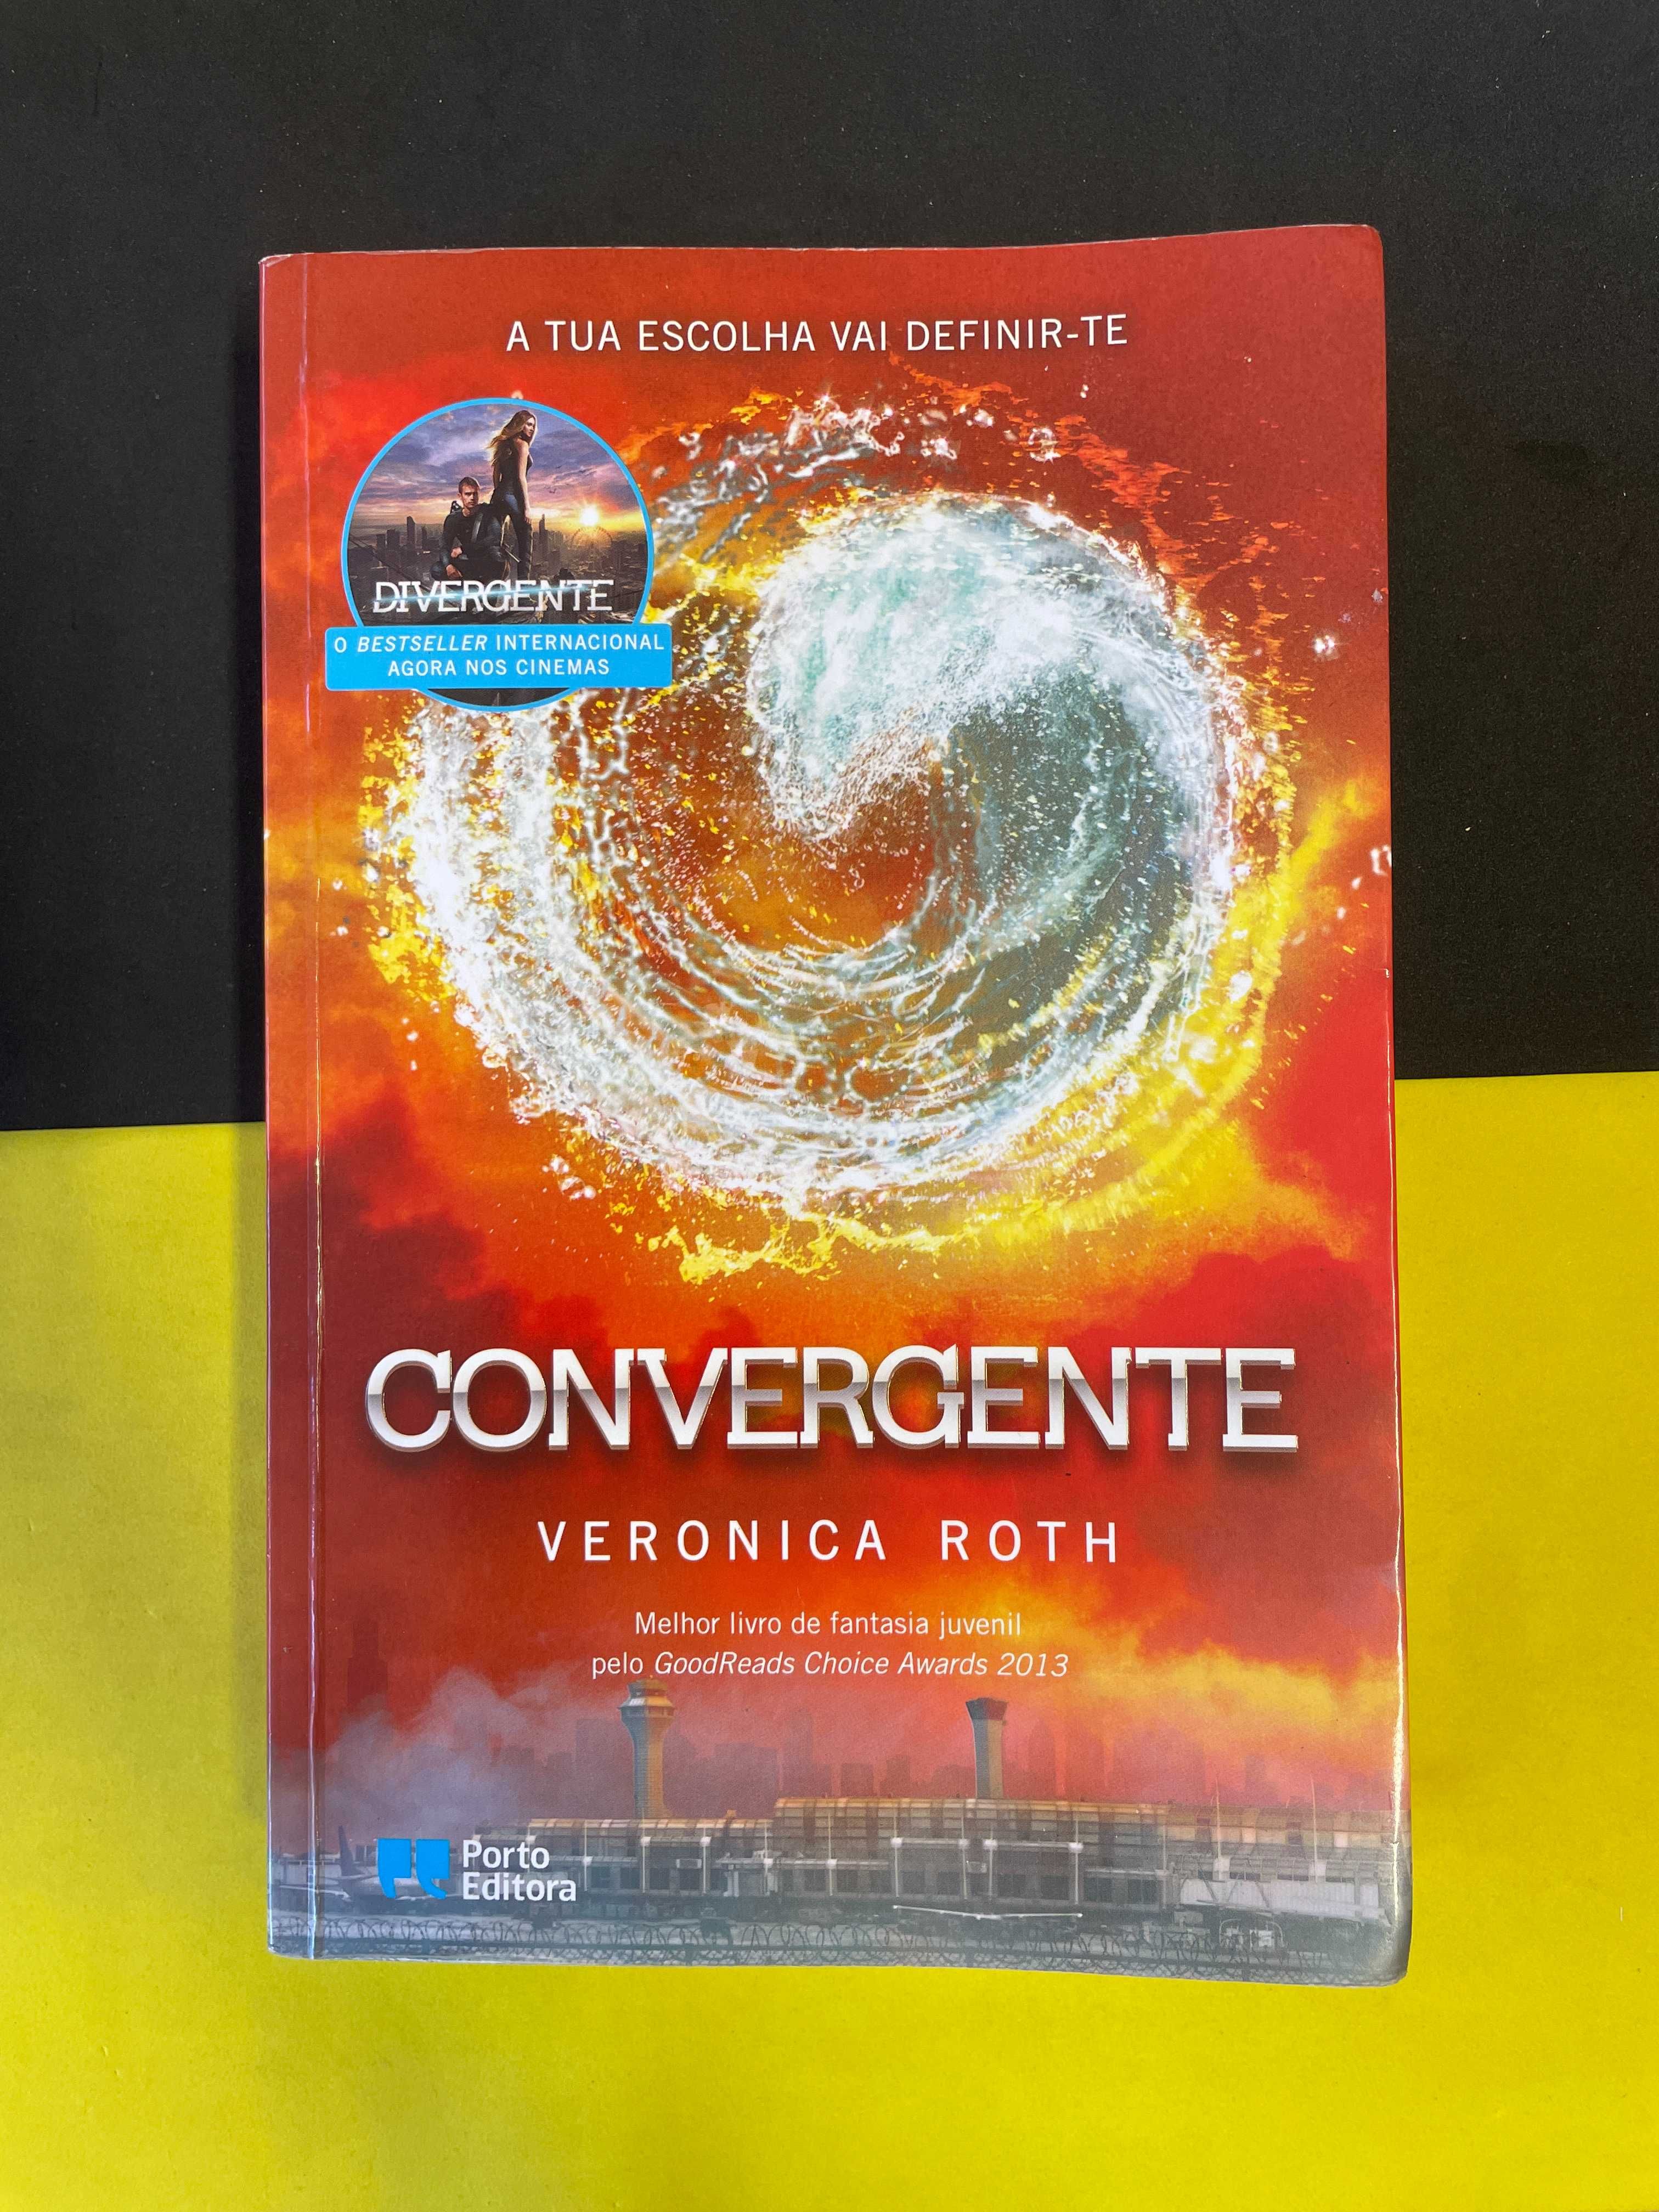 Veronica Roth - Convergente